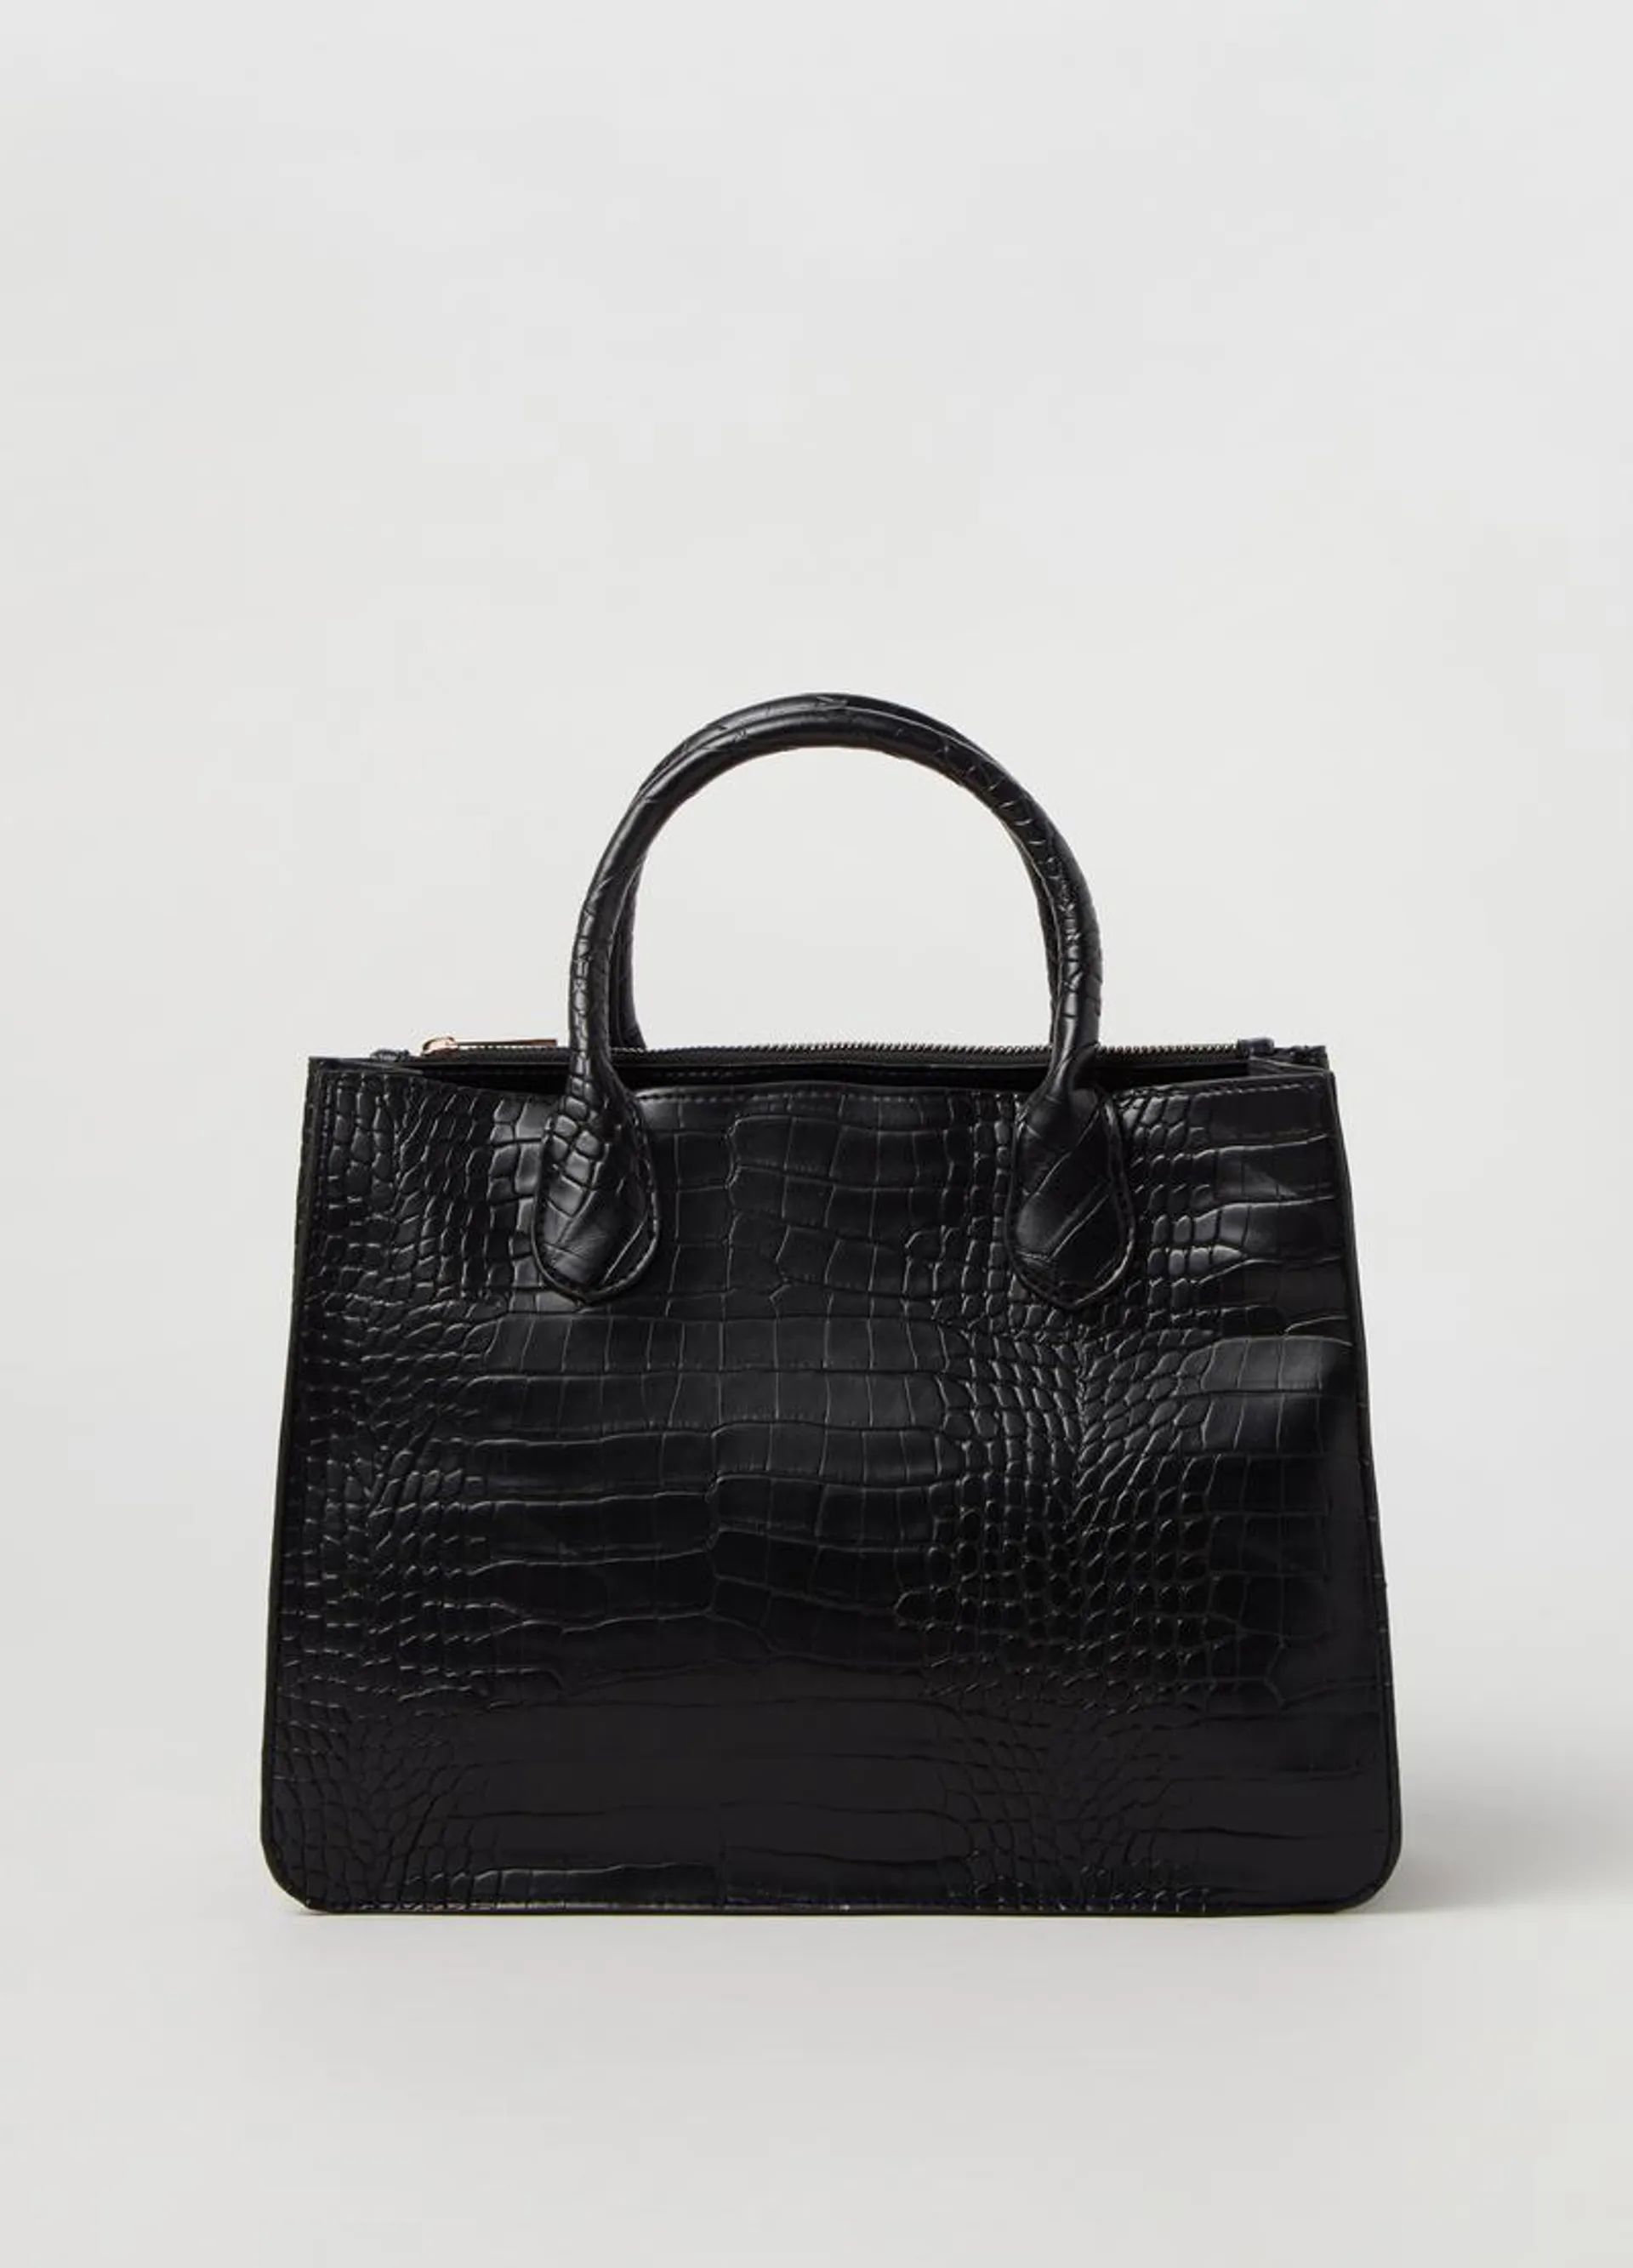 MYA handbag with crocodile texture